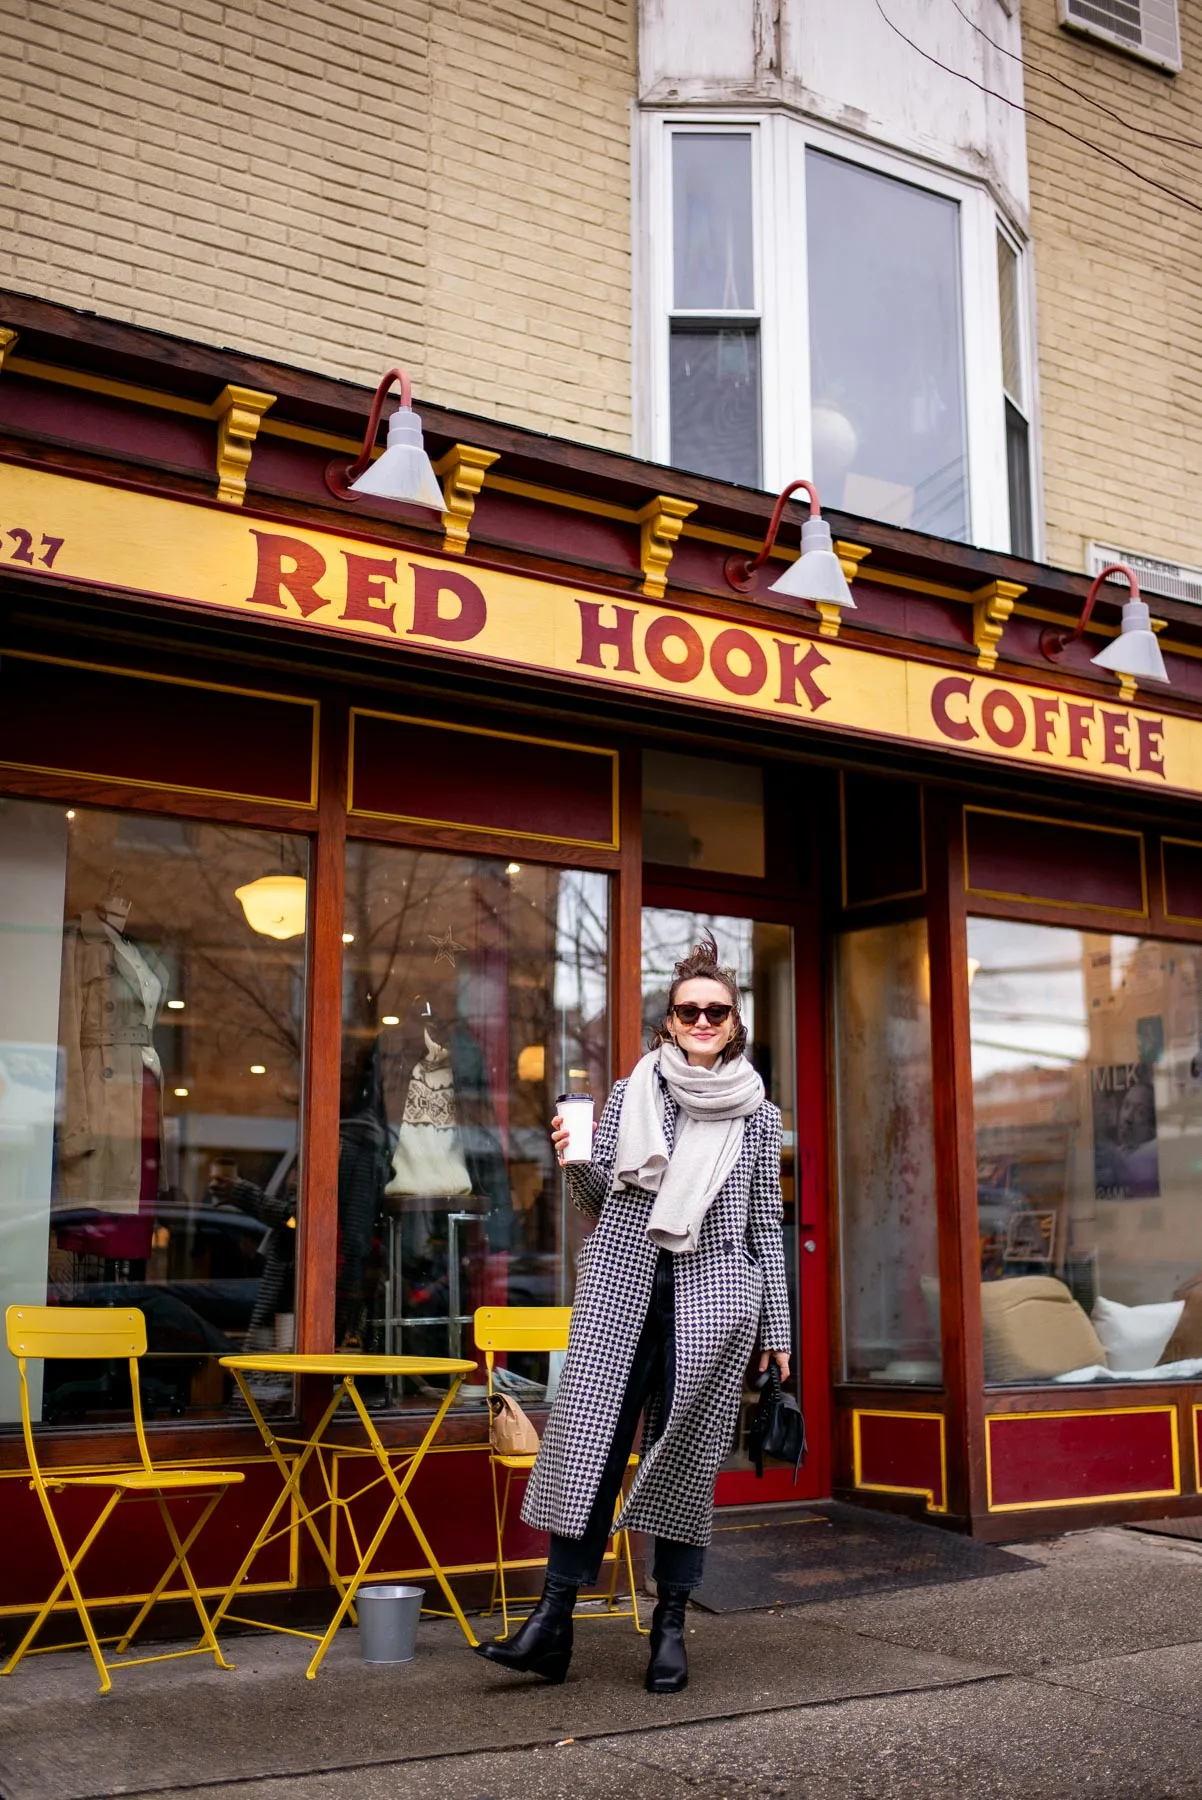 Red Hook Coffee